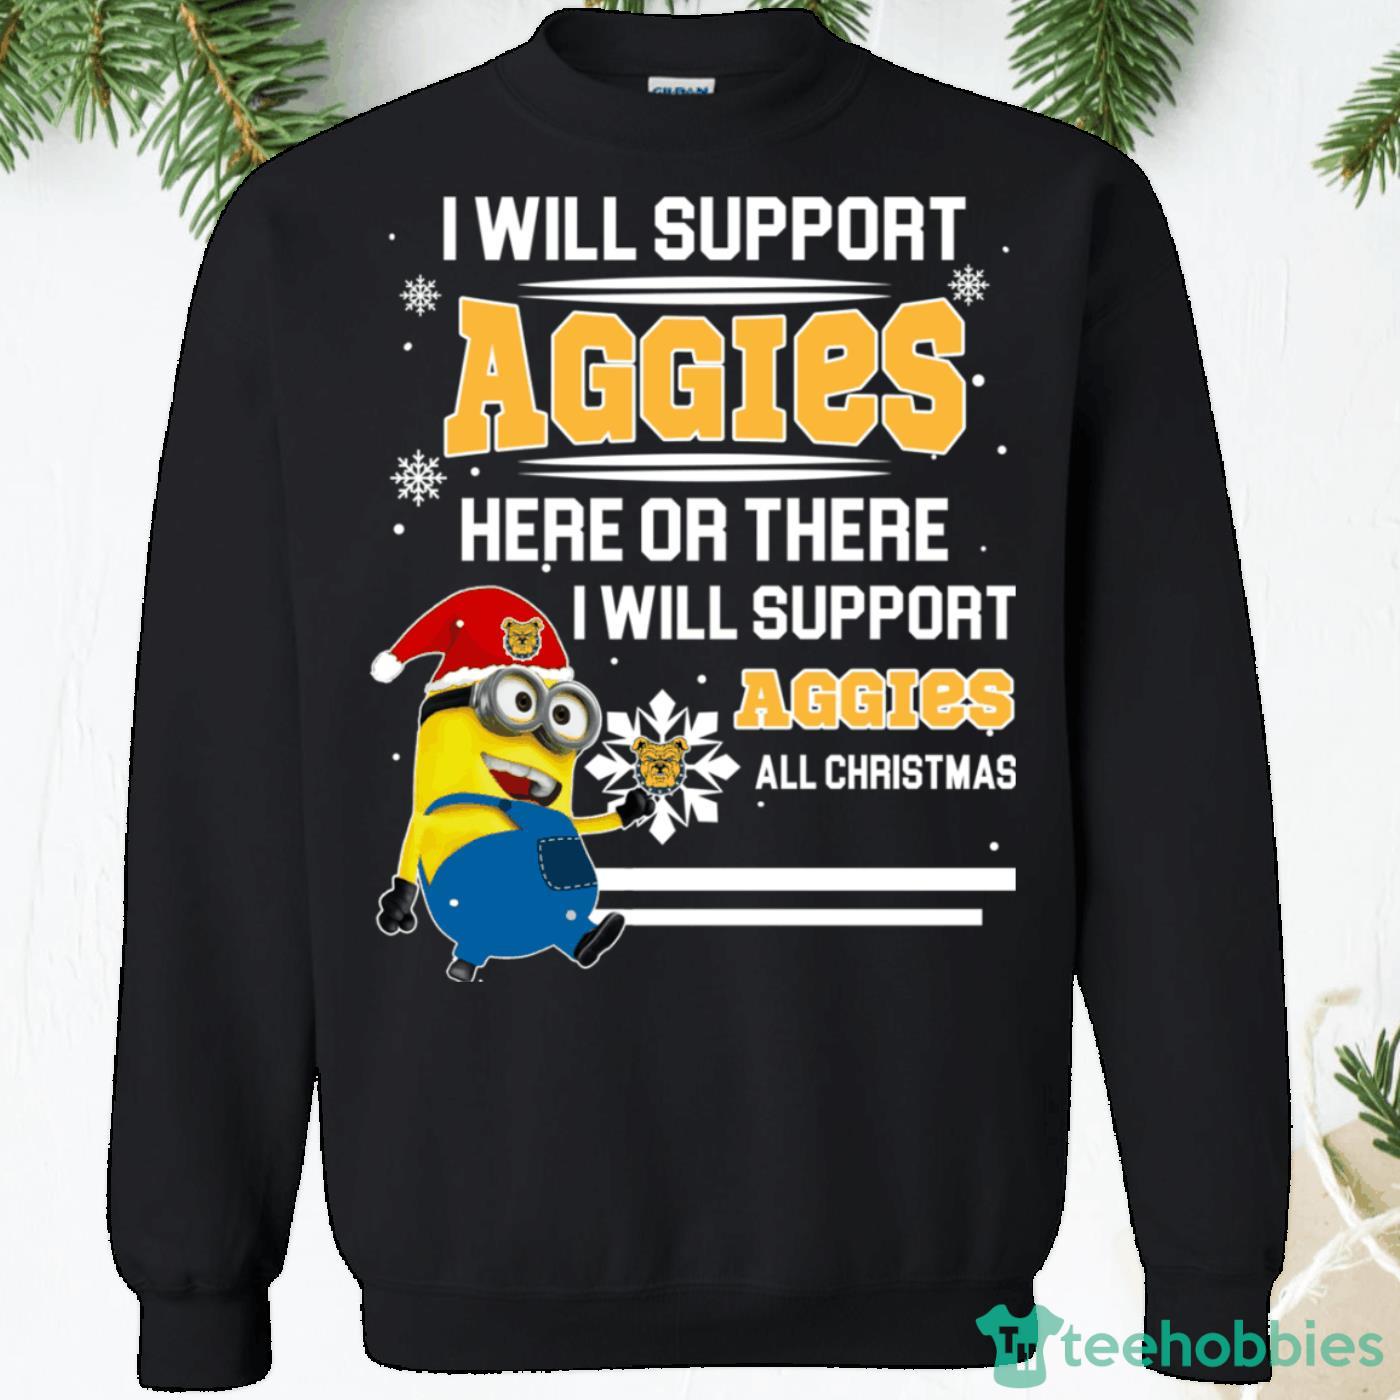 North Carolina AT Aggies Minion Christmas Sweatshirt Product Photo 1